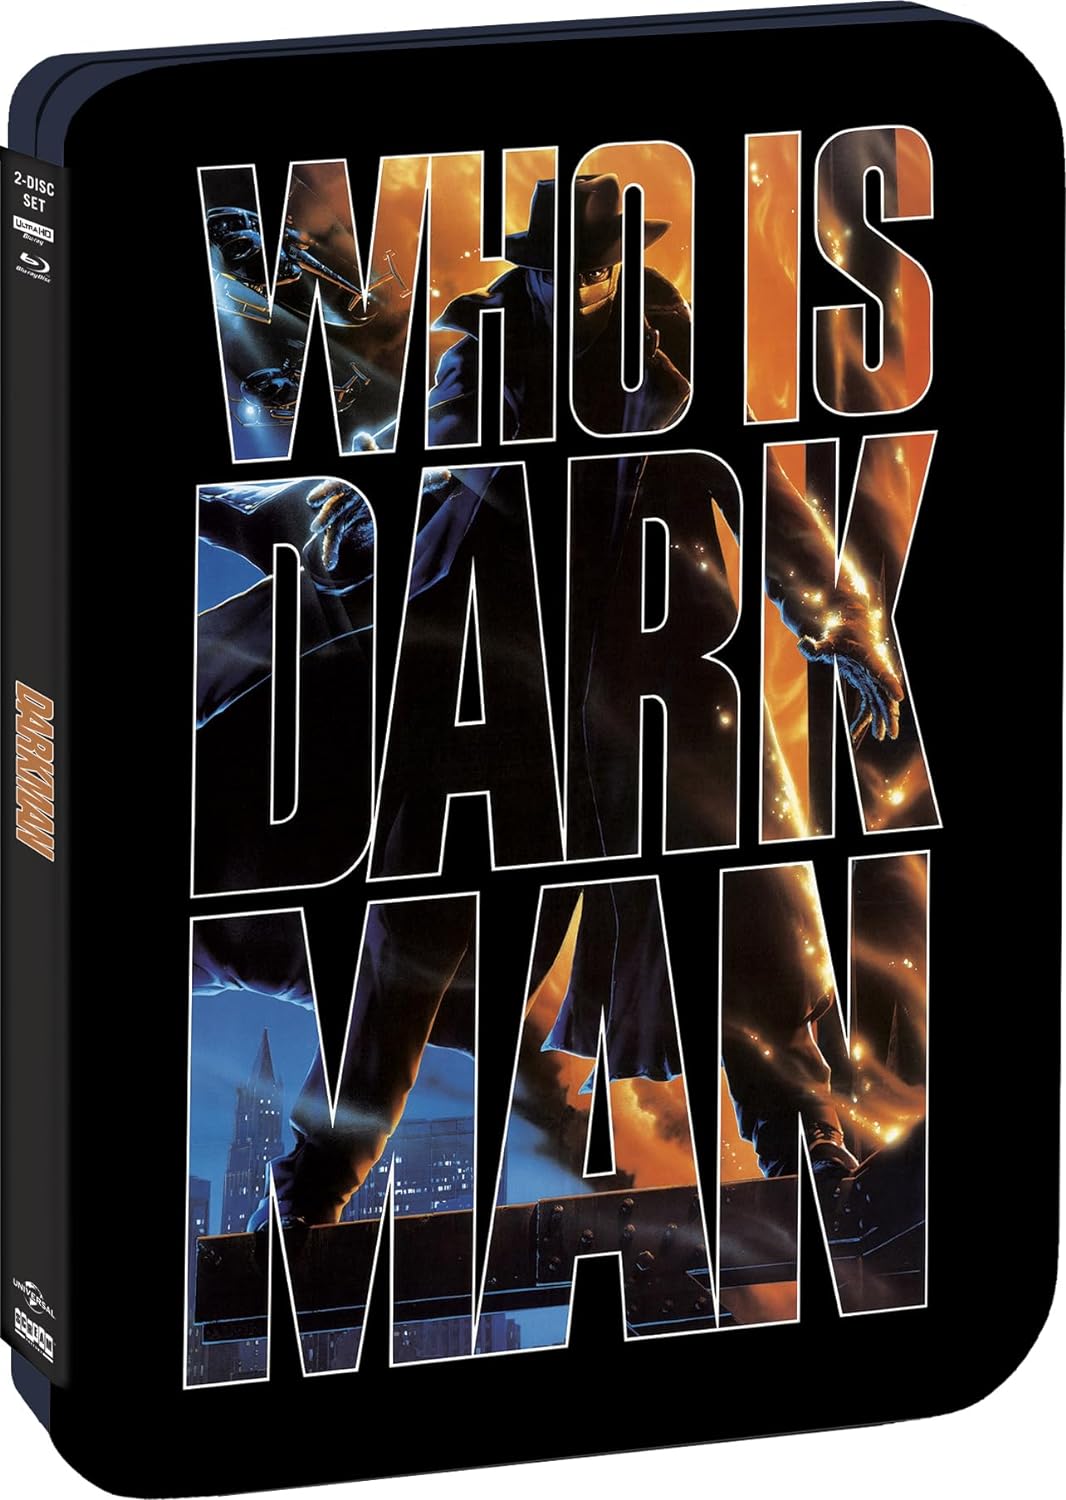 Darkman Limited Edition Scream Factory 4K UHD/Blu-Ray Steelbook [PRE-ORDER]